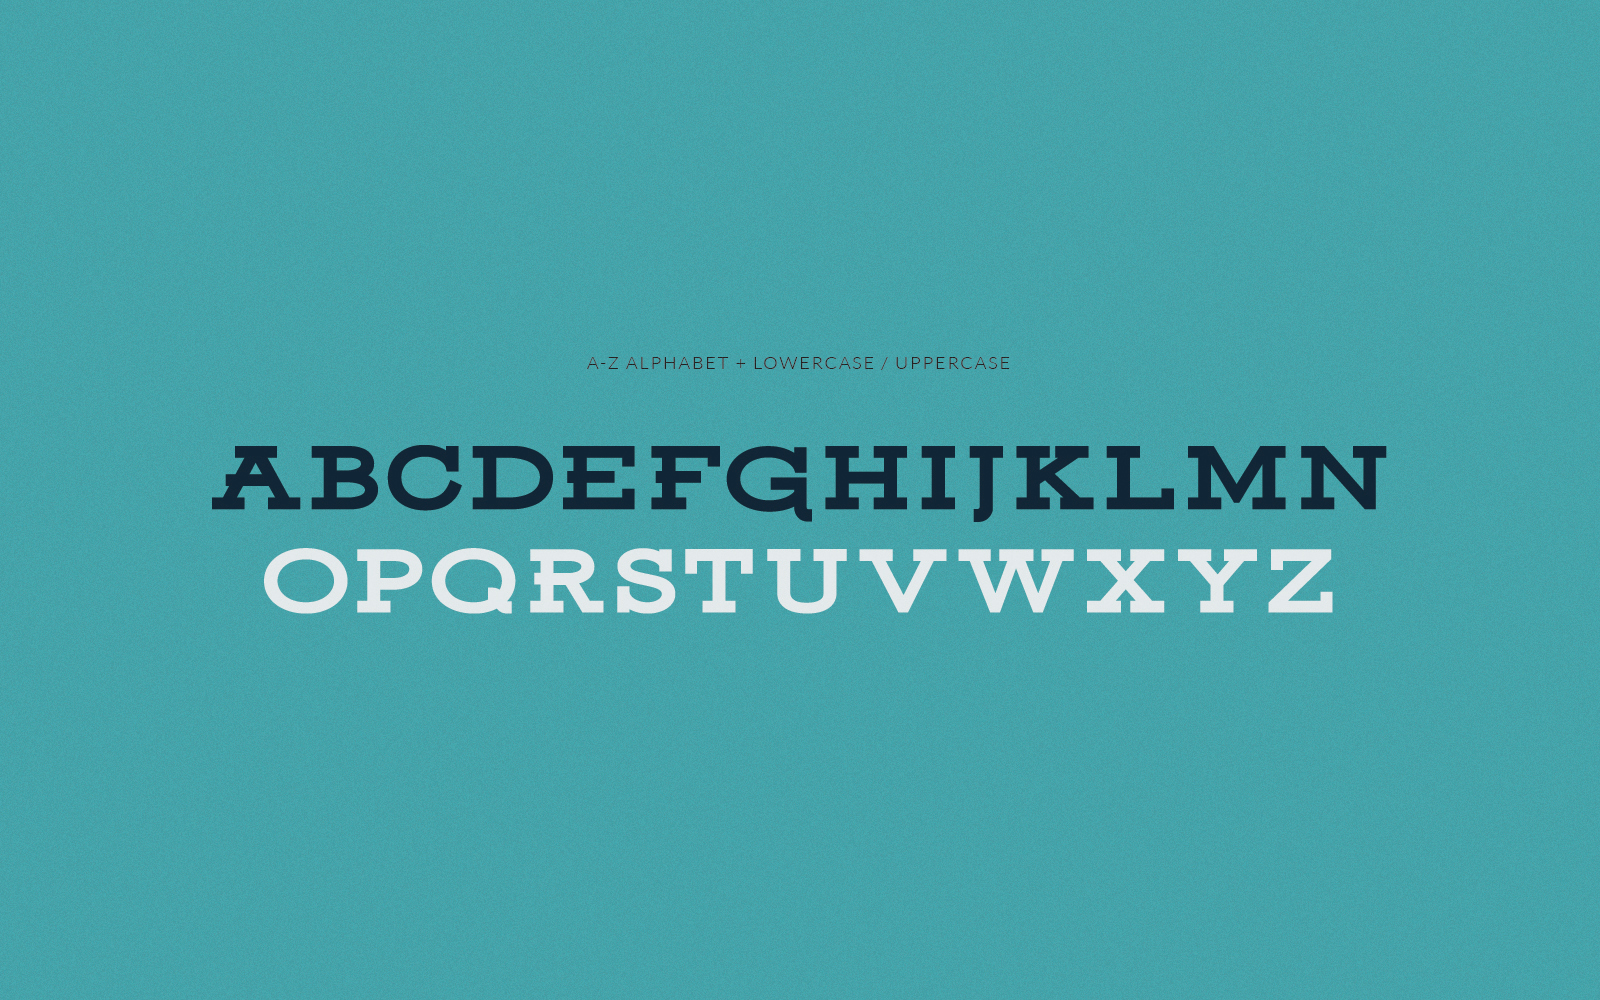 Ansley Display Free Font - serif